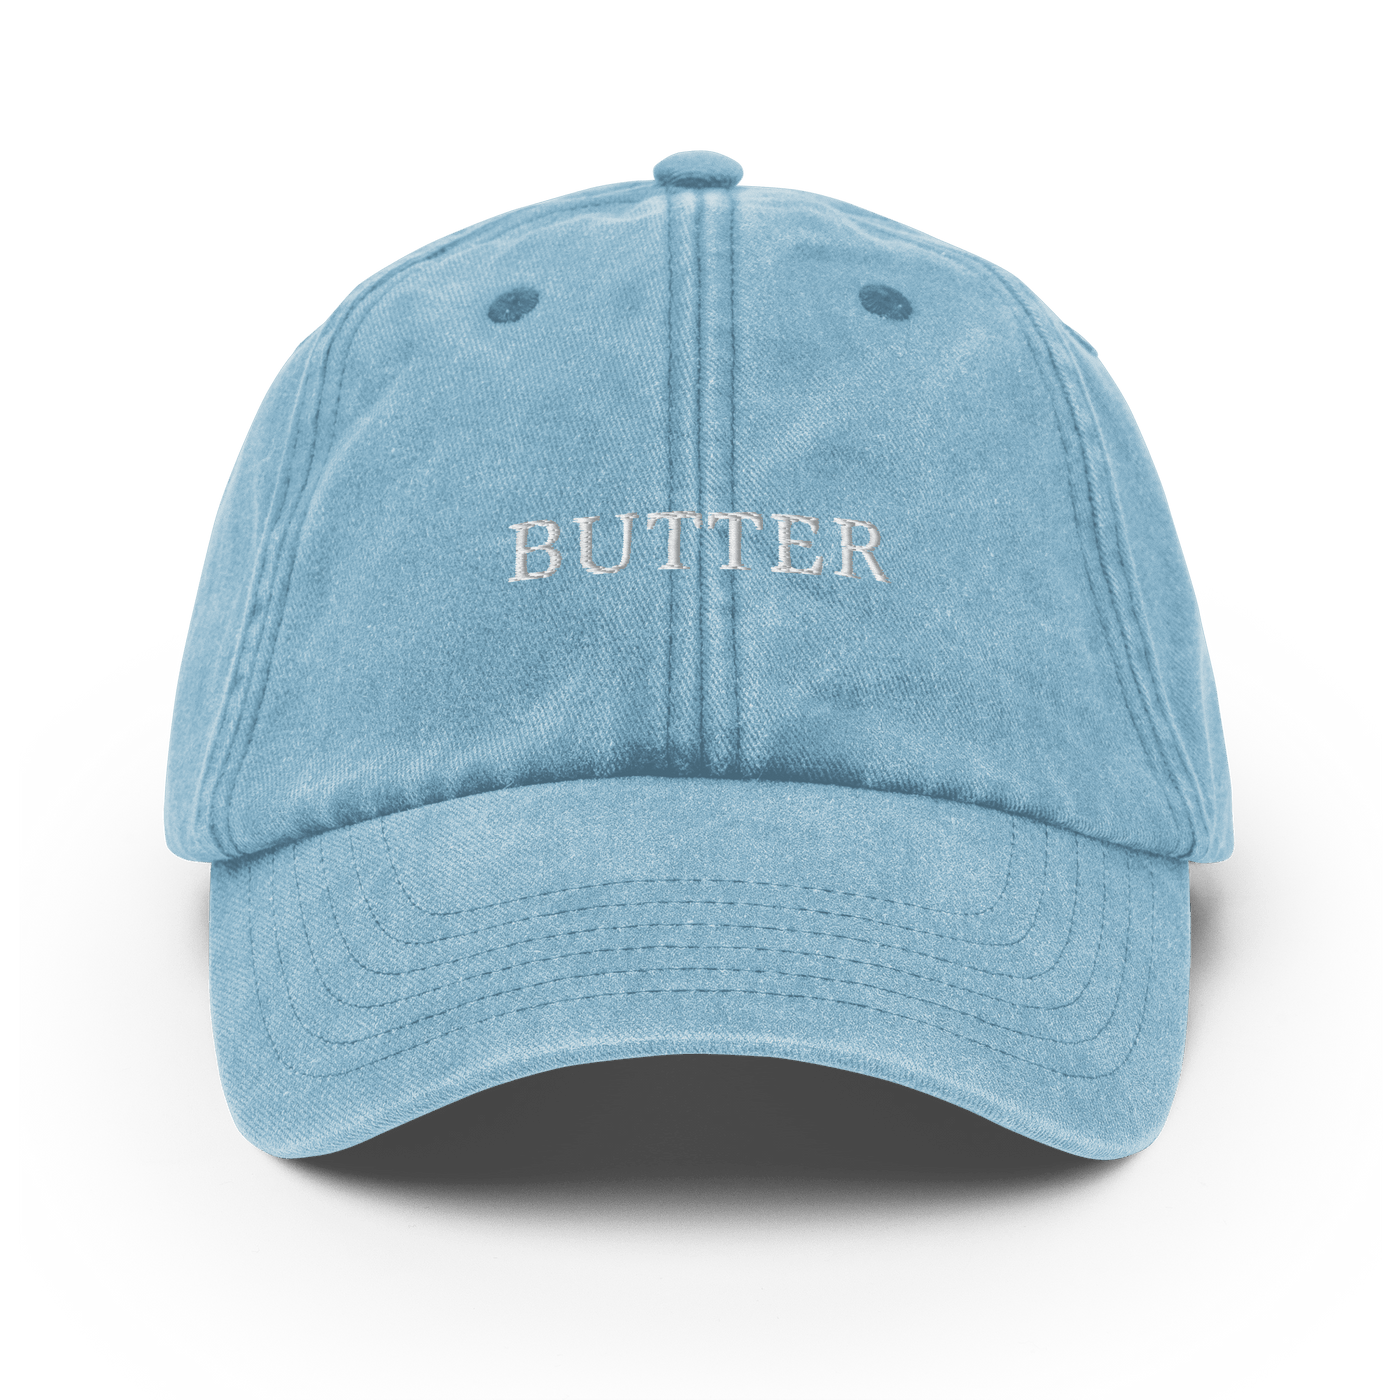 Butter Vintage Hat - Vintage Light Denim - - Just Another Cap Store